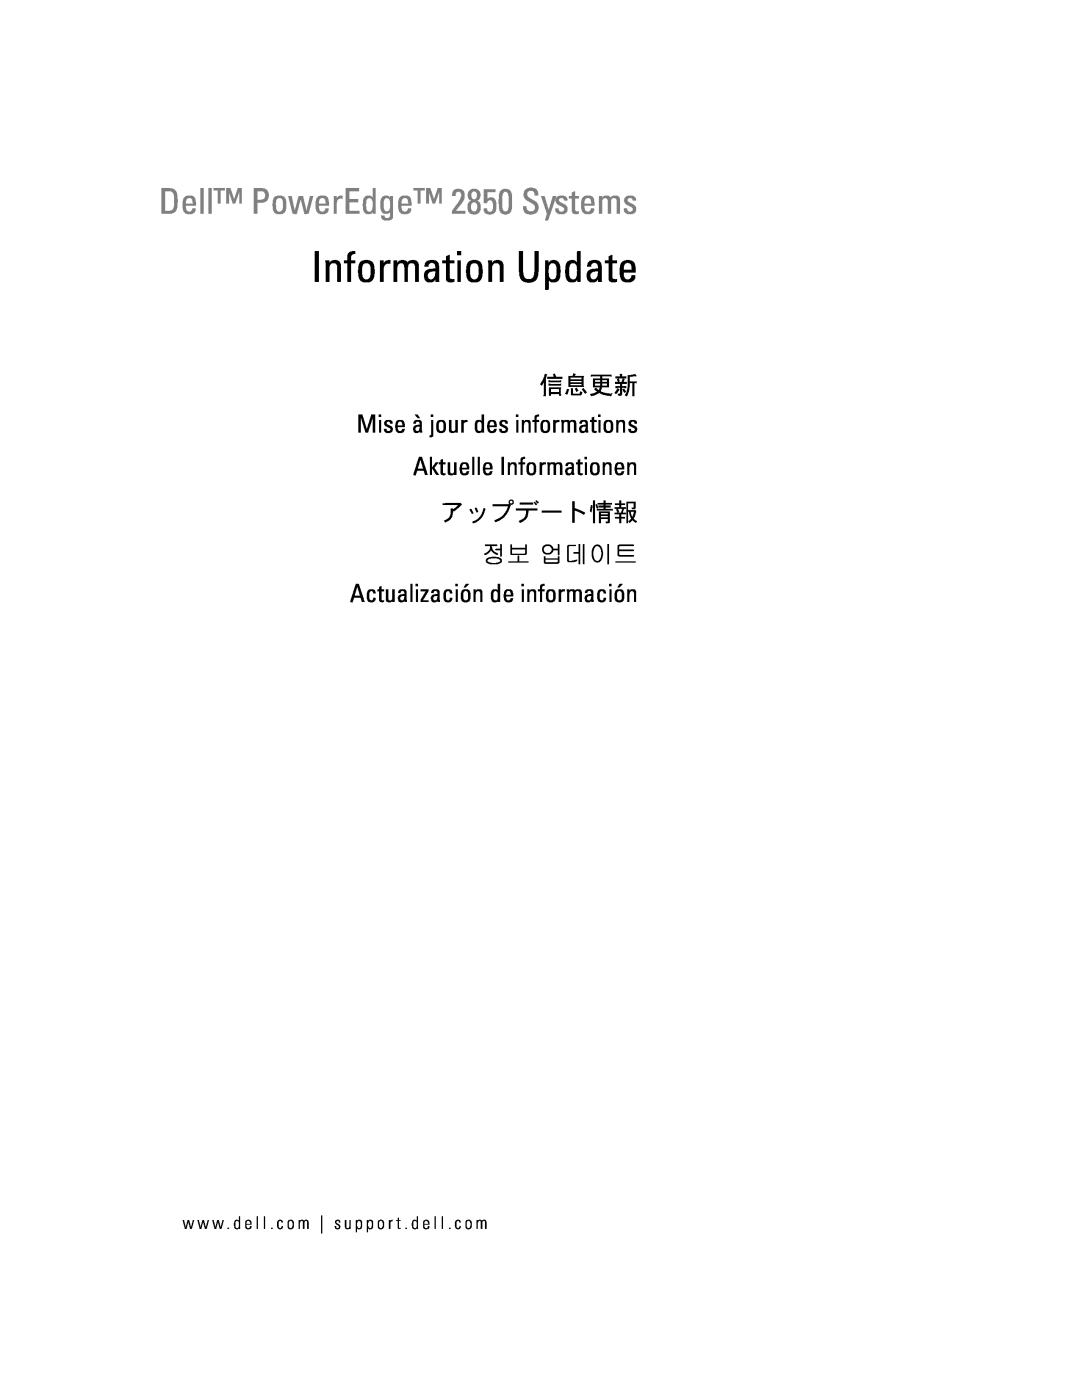 Dell manual Information Update, Dell PowerEdge 2850 Systems, Mise à jour des informations Aktuelle Informationen, 信息更新 